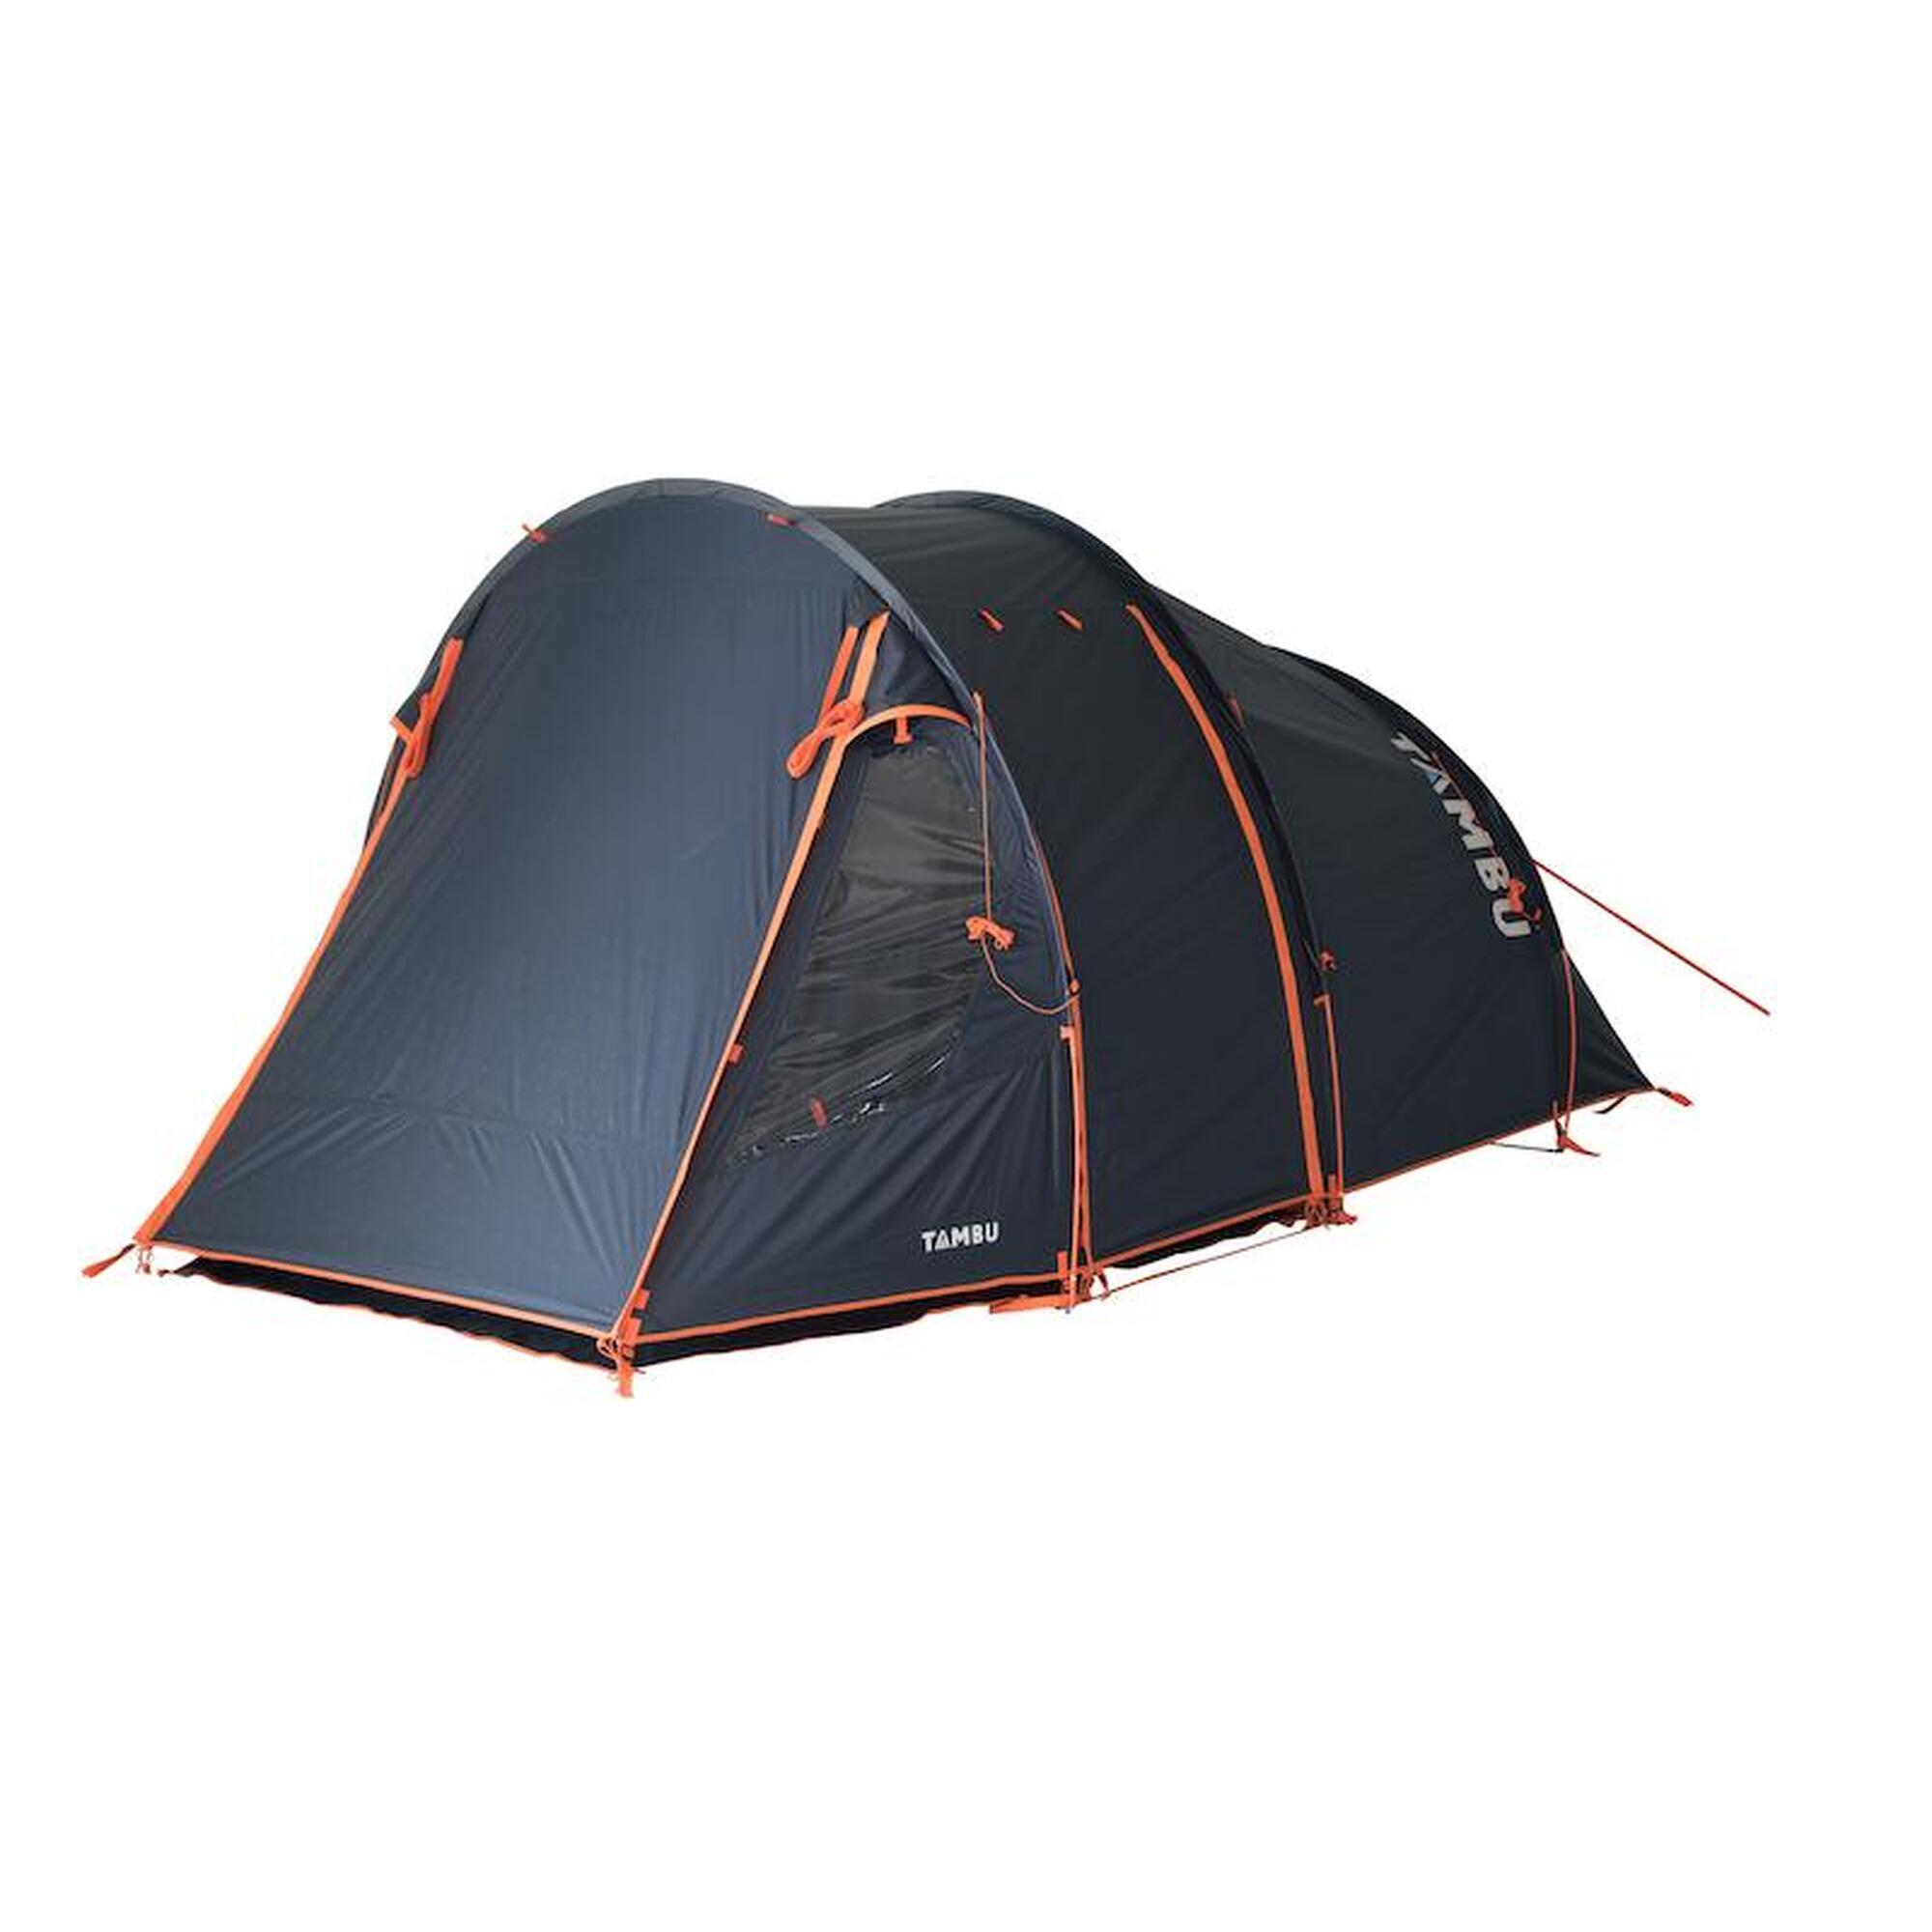 Tunnelzelt TAMBU Abakasa 4 Personen Camping Zelt mit Vorzelt